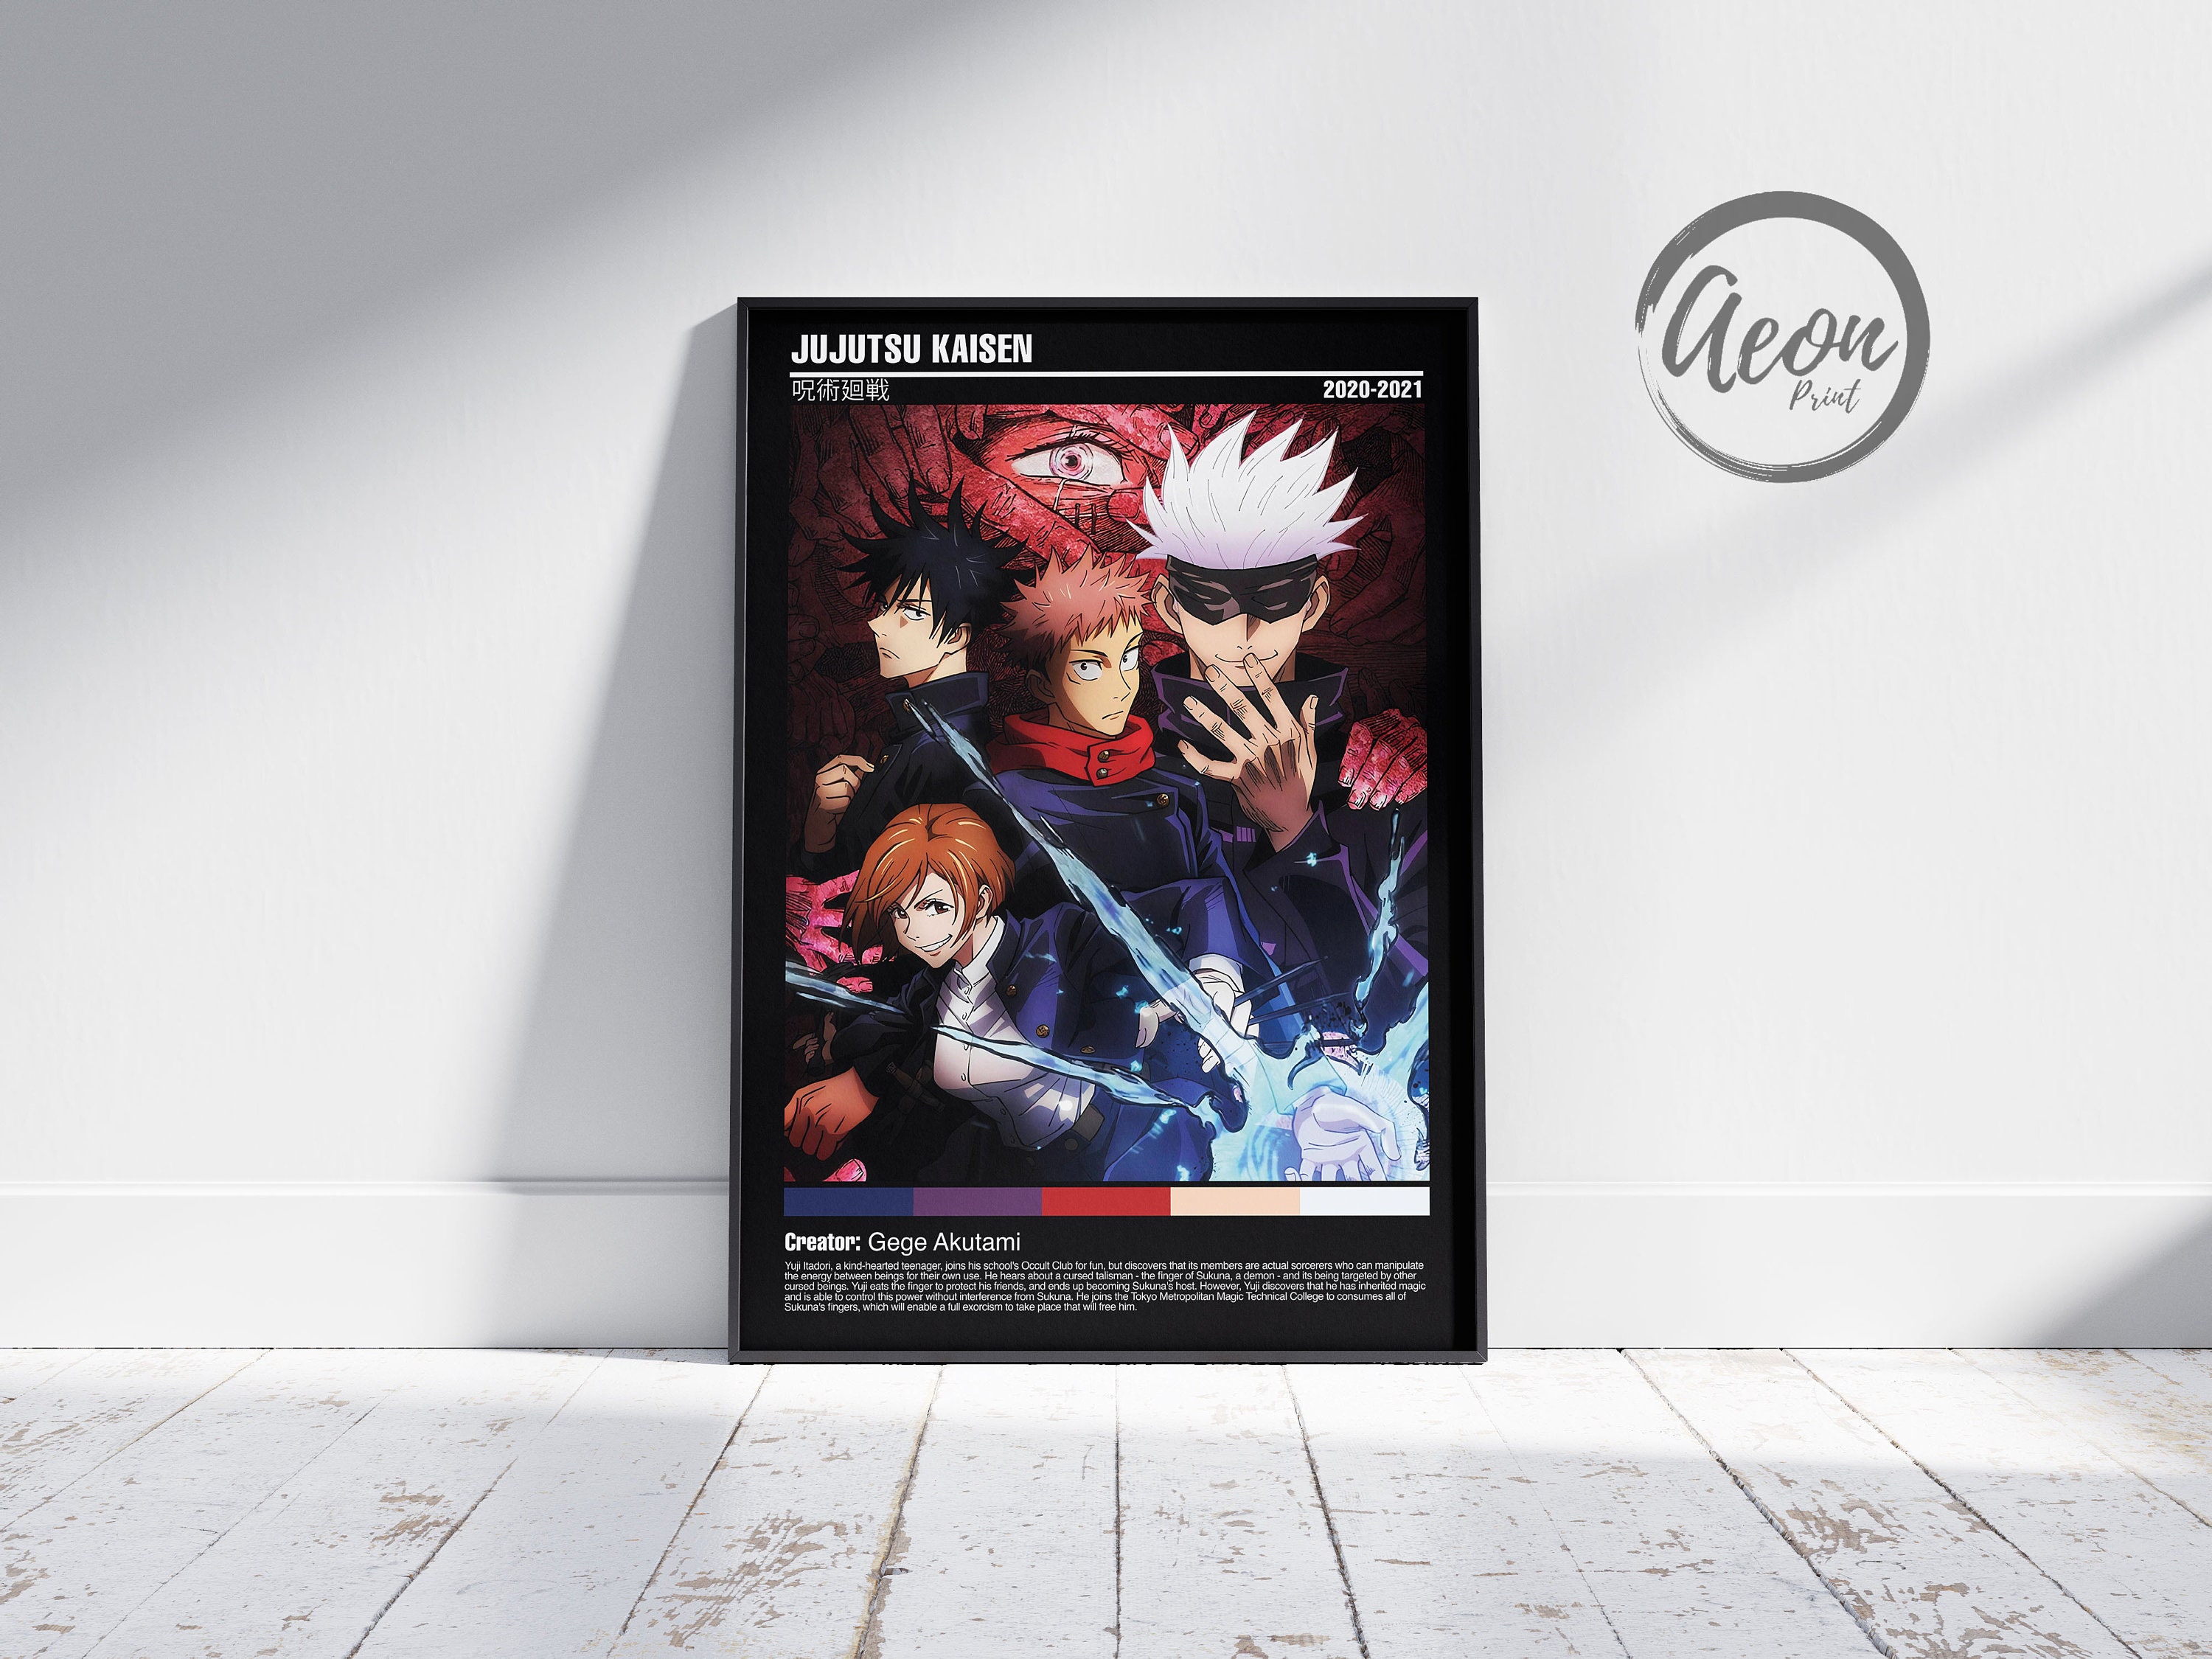 Anime Bleach Renji Abarai Fan Art HD Wall Poster, 300 GSM Printed Poster